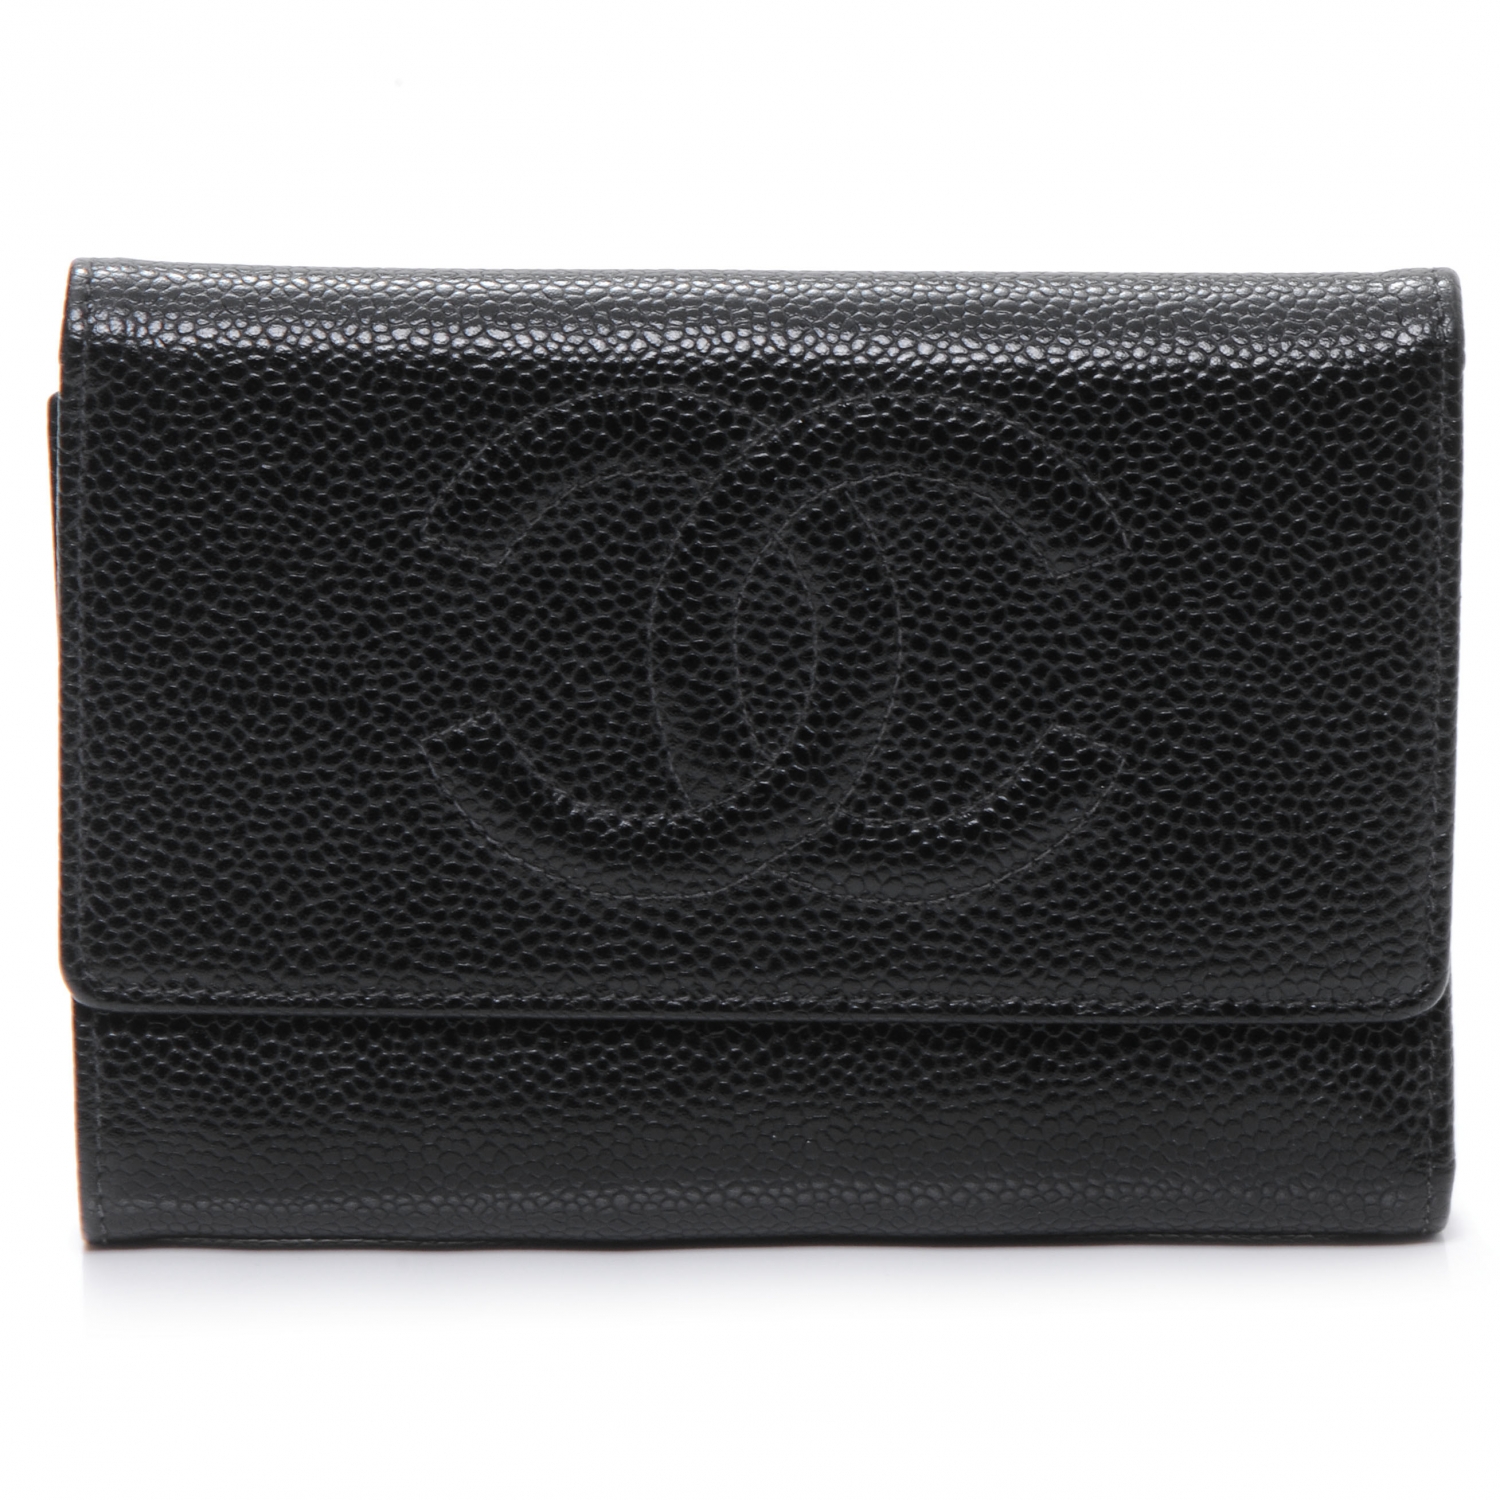 CHANEL Caviar CC Flap Wallet Black 50305